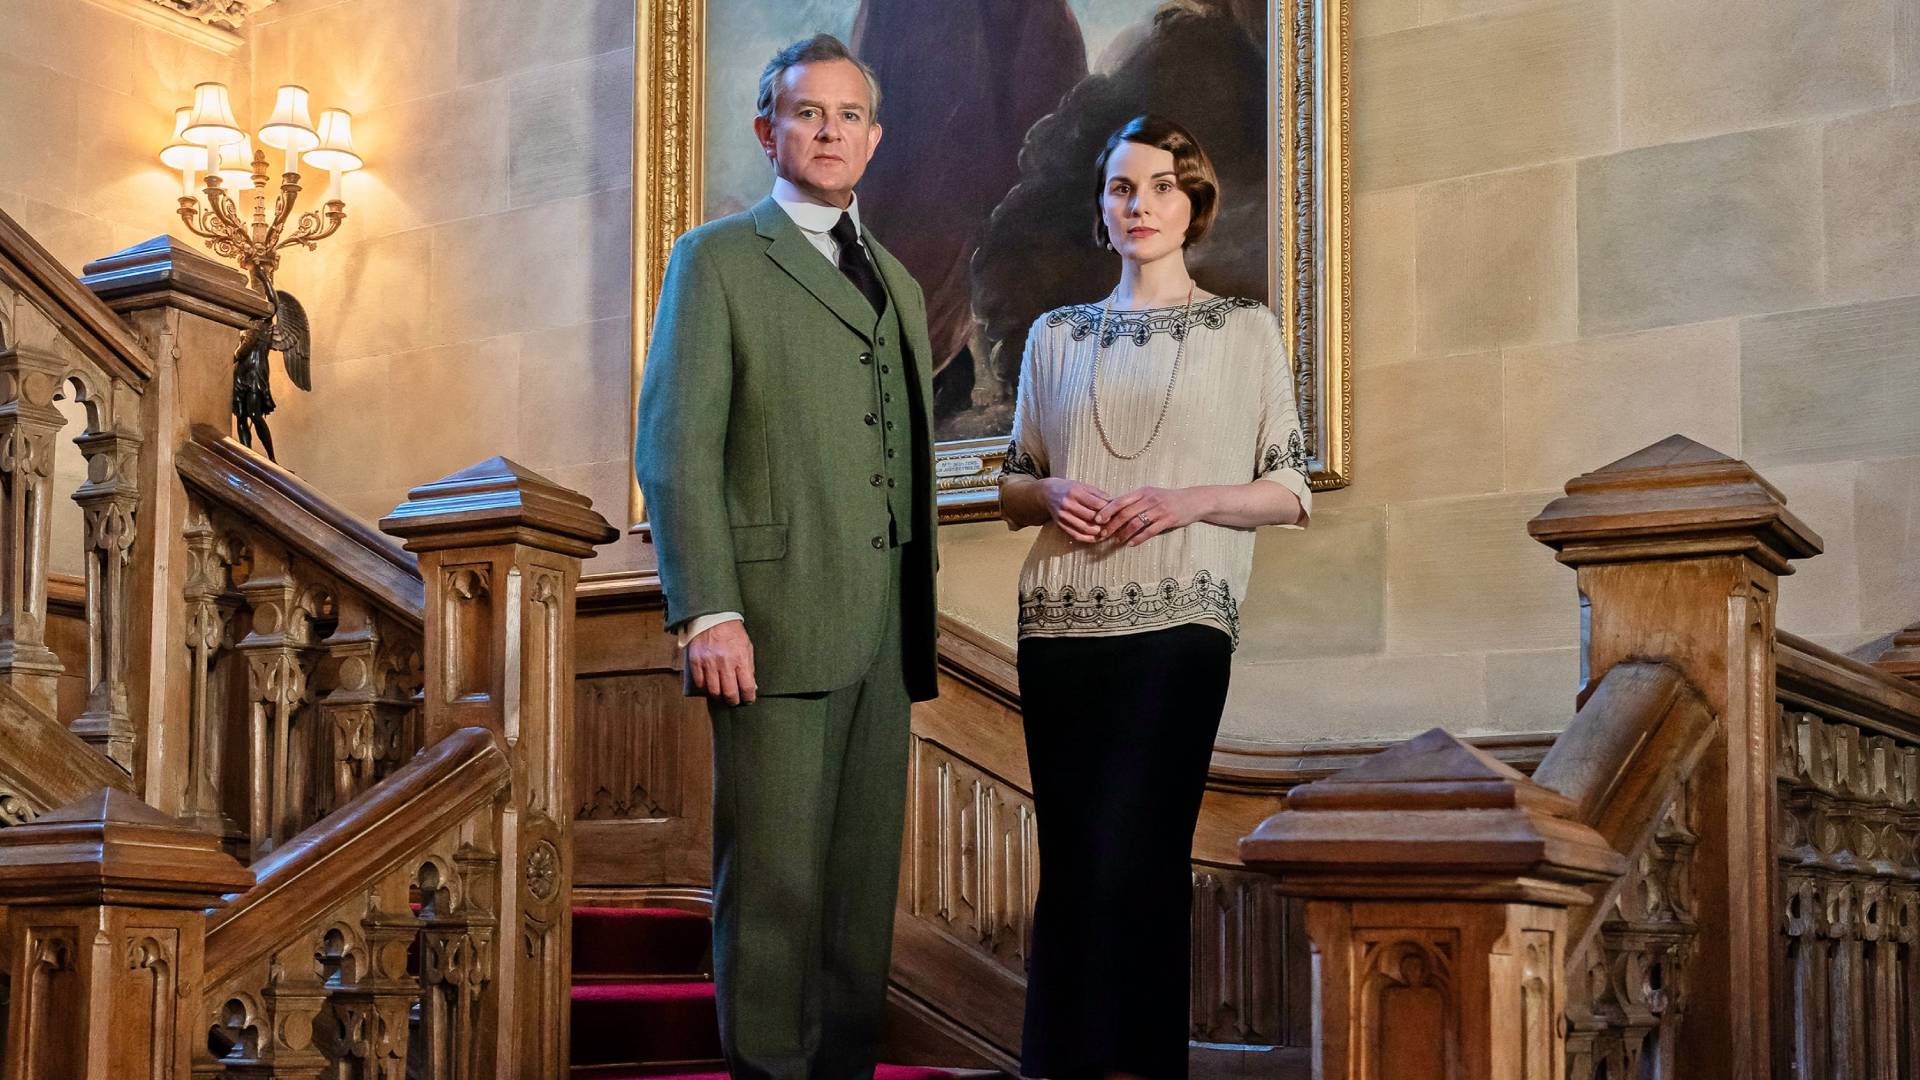 Universal Pictures divulga novo trailer de Downton Abbey II: Uma Nova Era